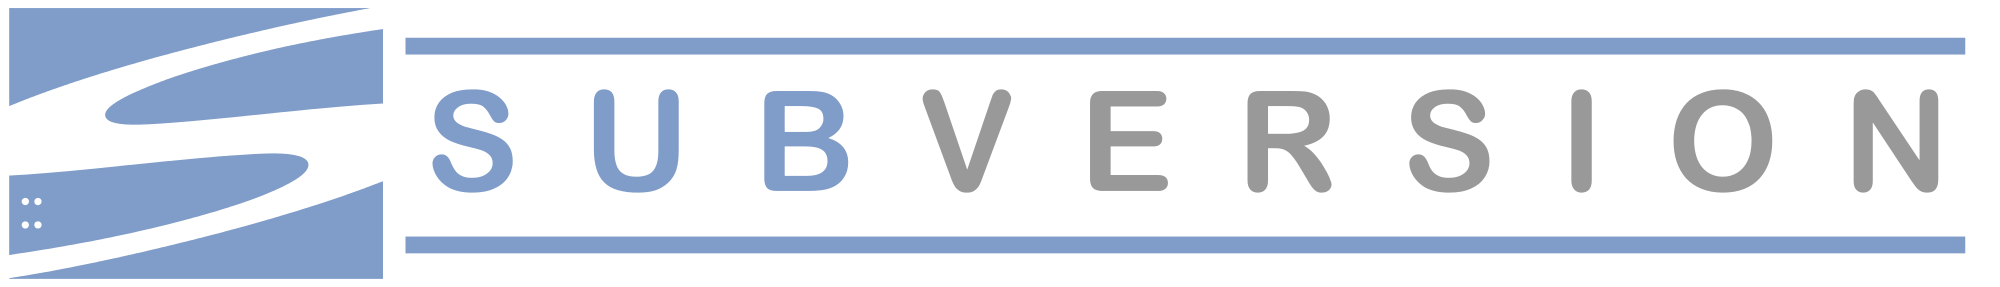 Subversion Logo - File:Subversion logo.svg - Wikimedia Commons